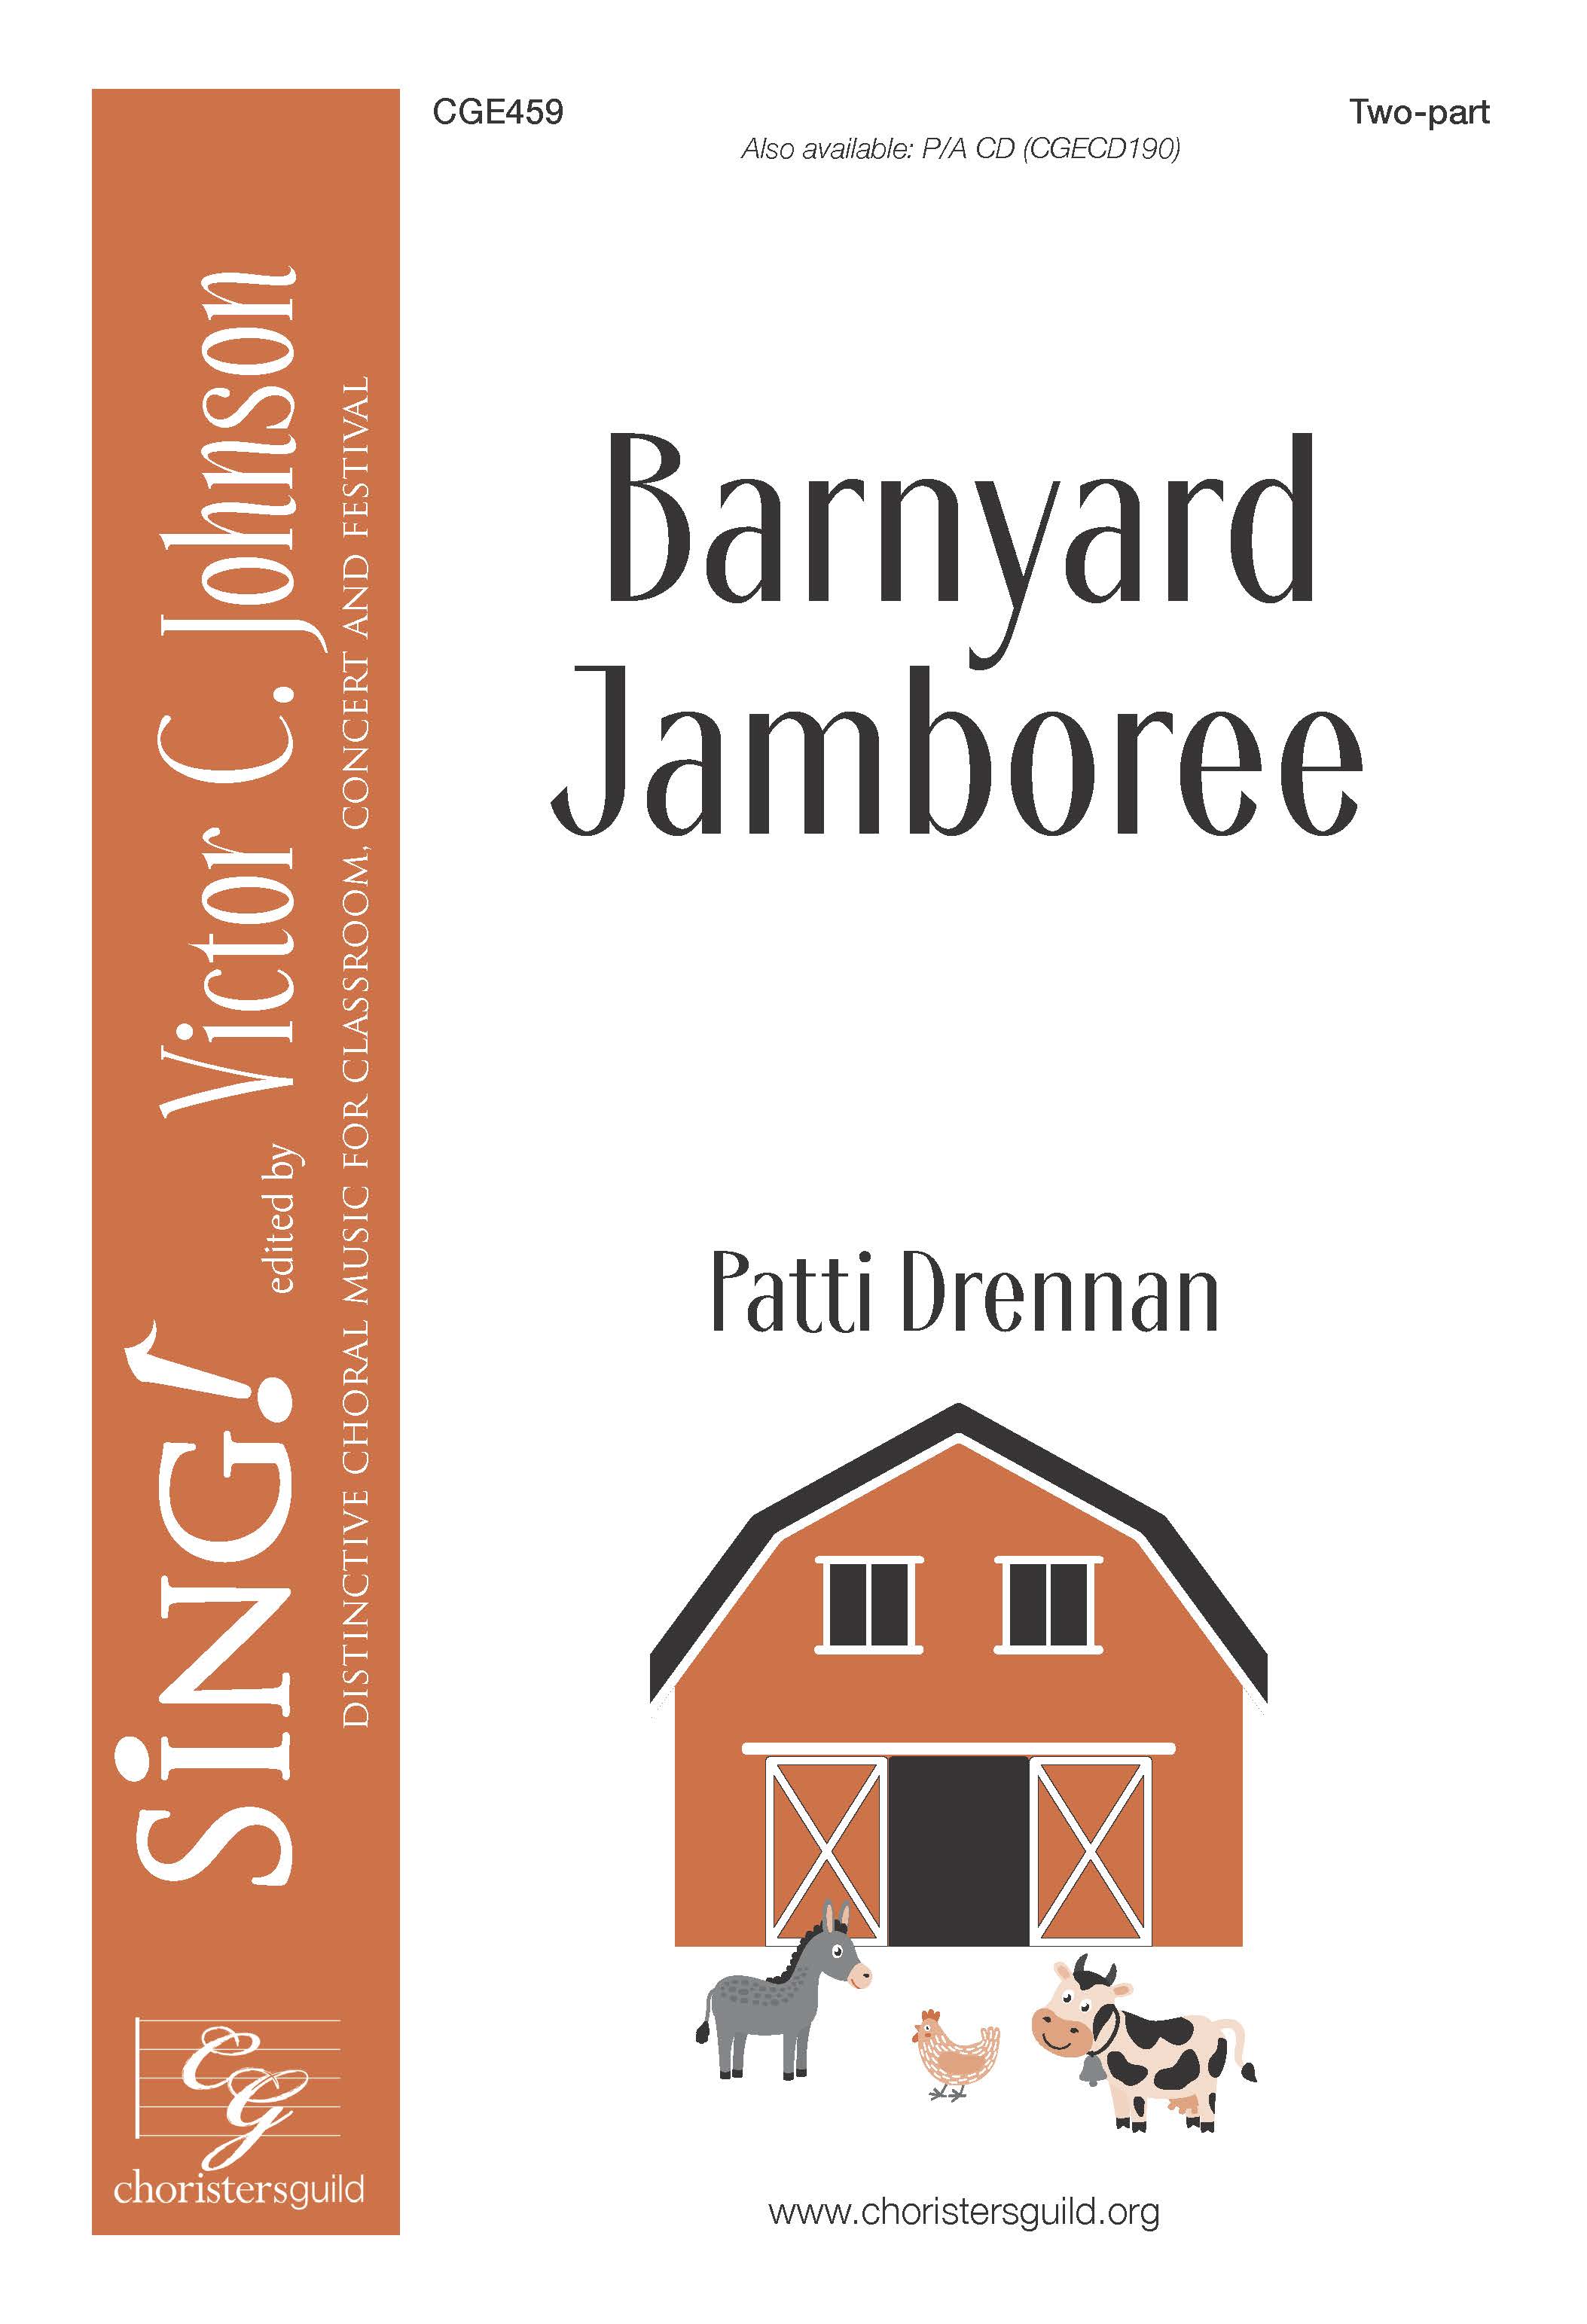 Barnyard Jamboree - Two-part